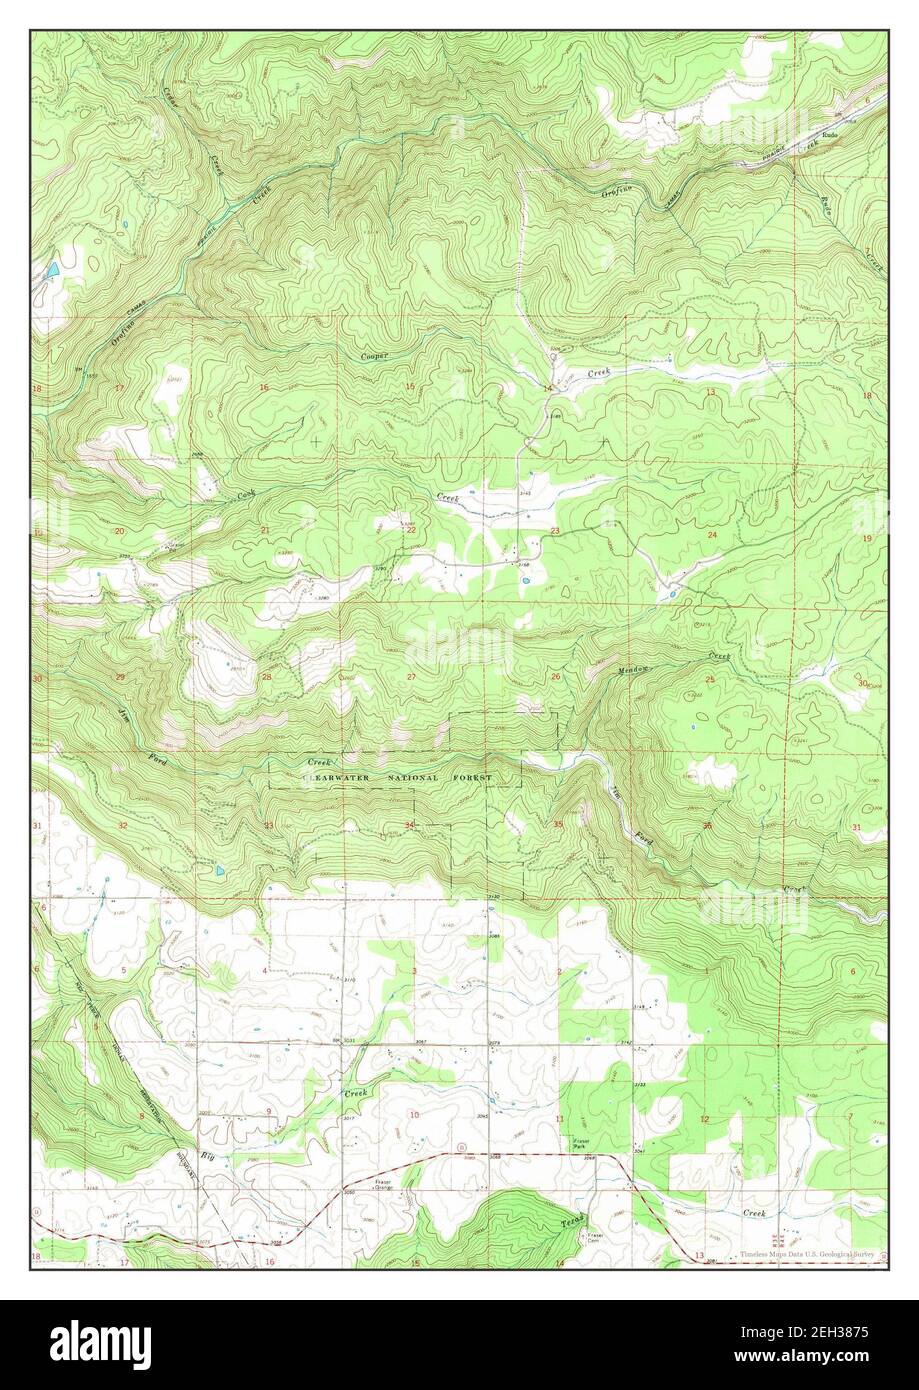 Rudo, Idaho, map 1967, 1:24000, United States of America by Timeless Maps, data U.S. Geological Survey Stock Photo